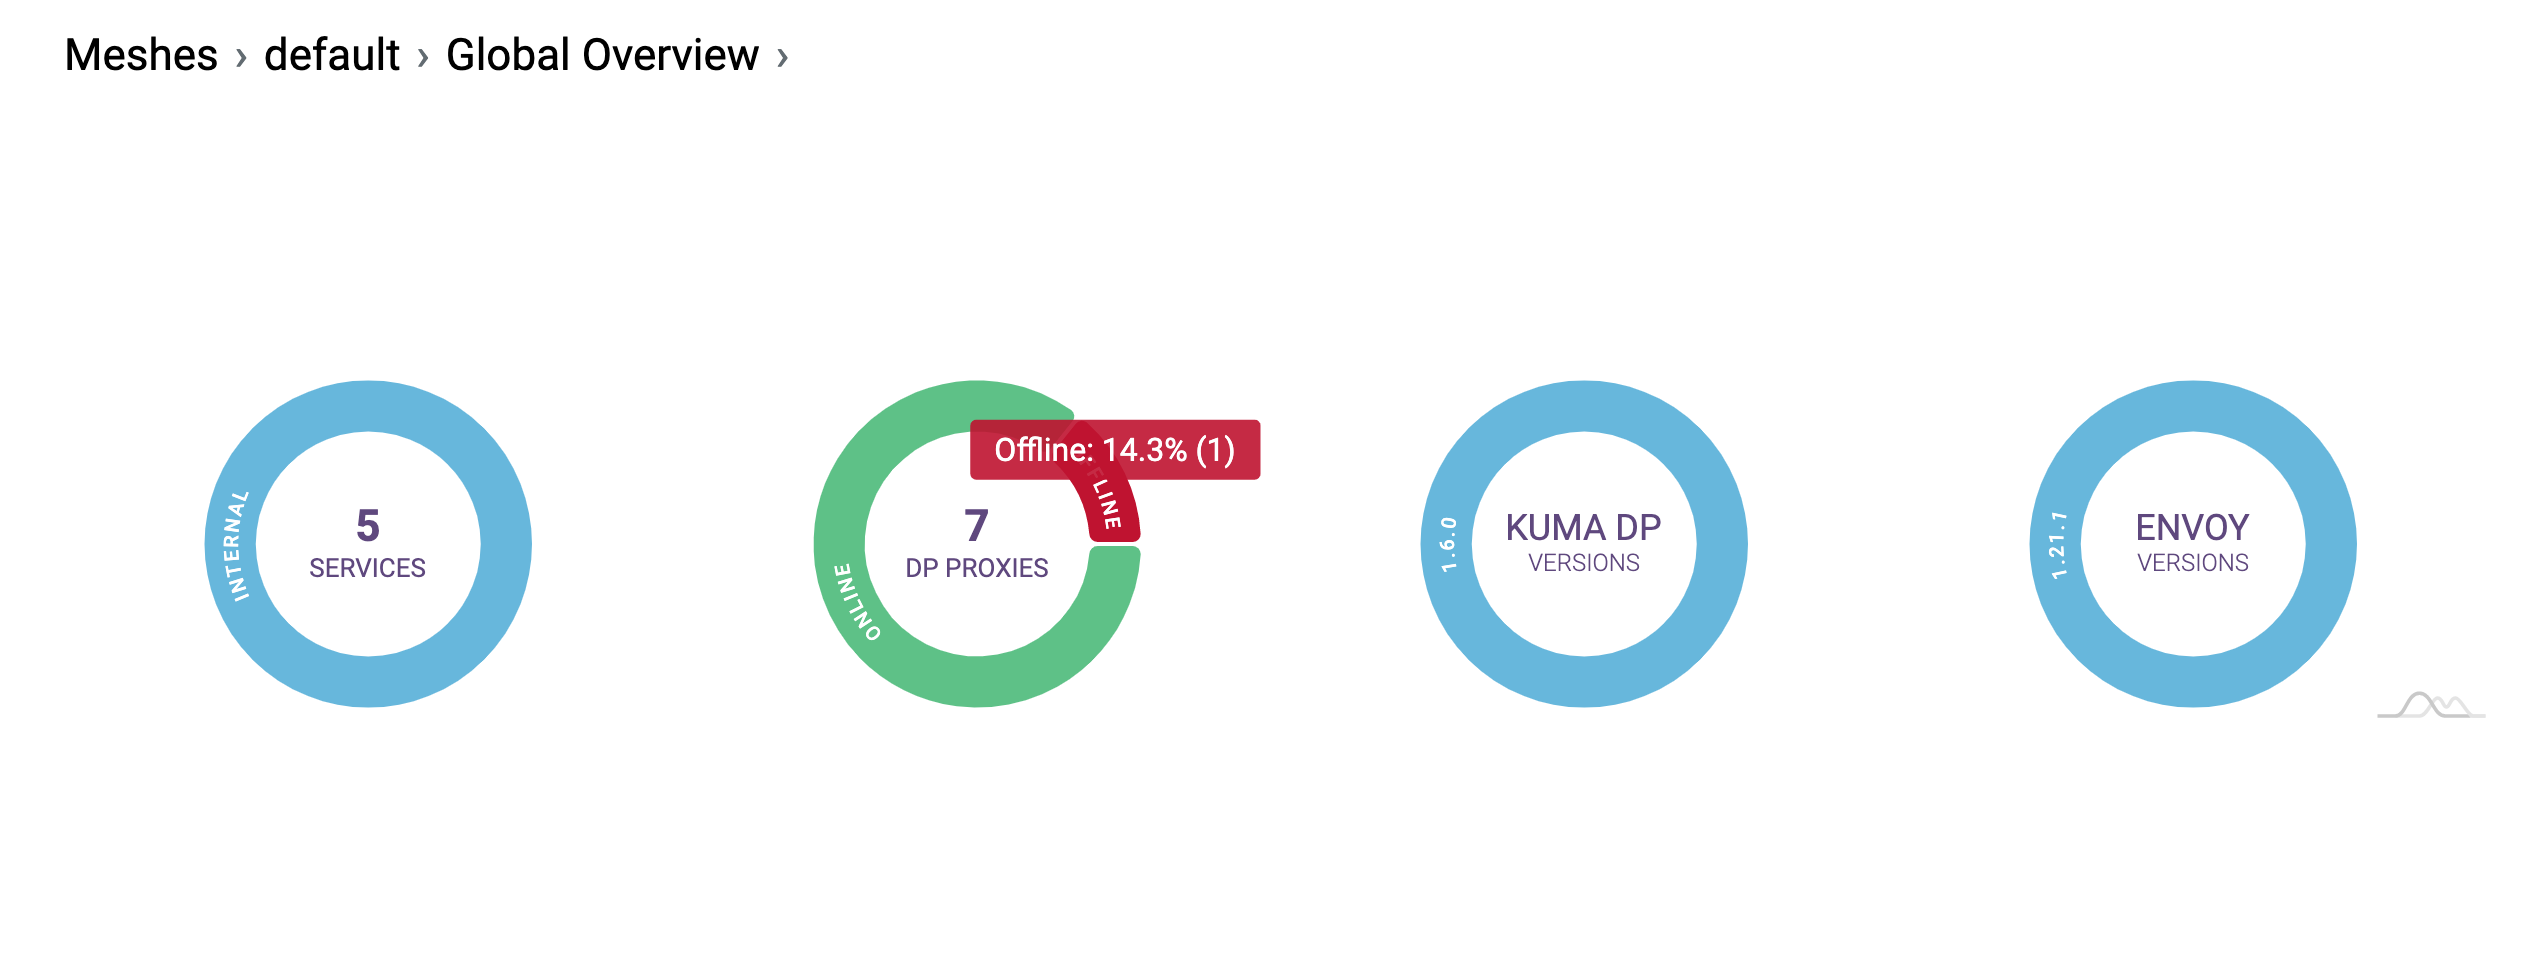 A screenshot of the Mesh Overview of the Kuma GUI